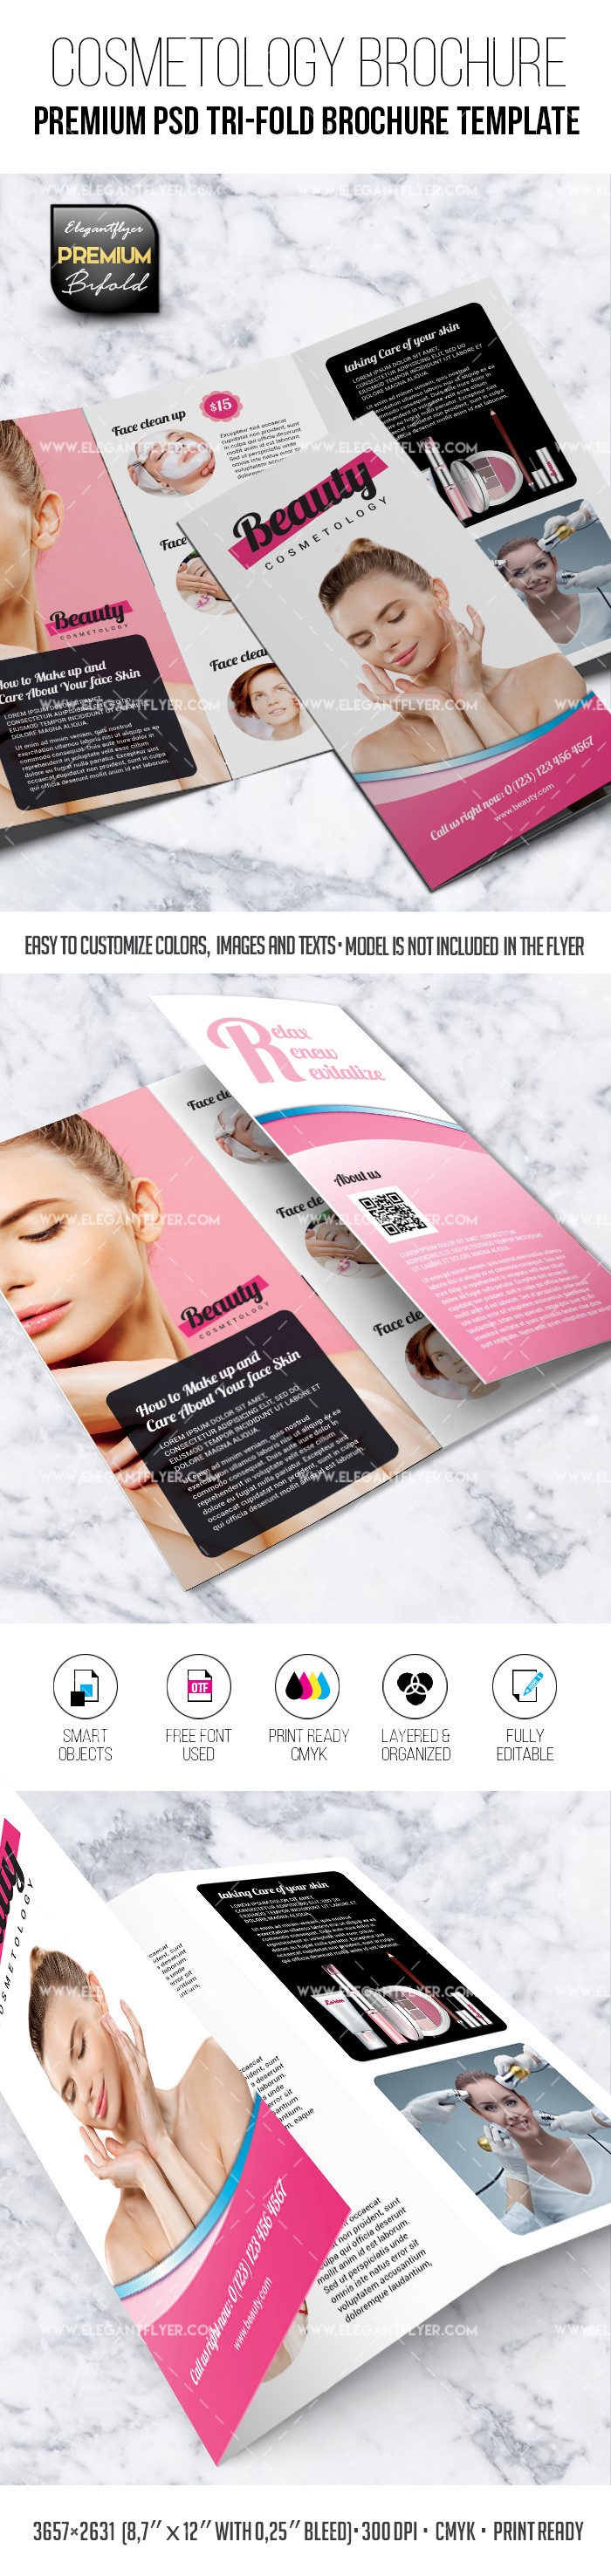 Cosmetology Tri-Fold Brochure by ElegantFlyer